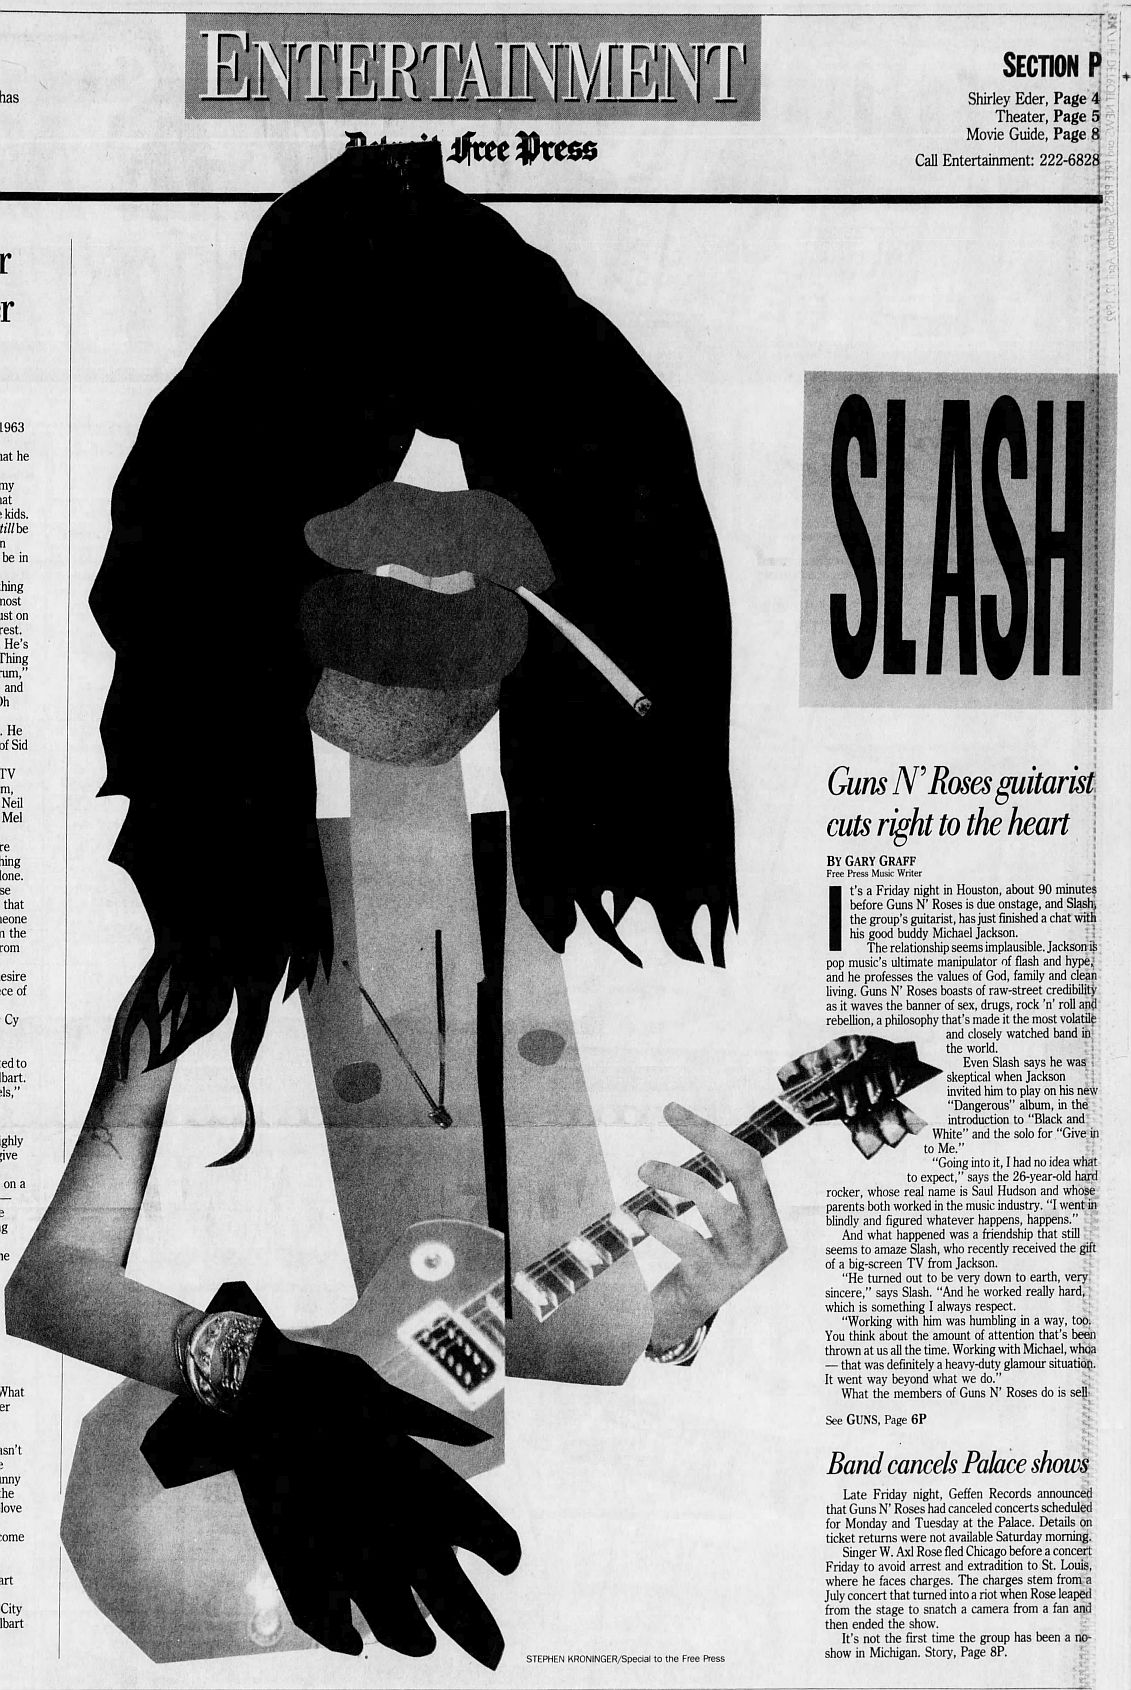 1992.04.12 - Detroit Free Press - Guns N' Roses Guitarist Cuts Right to the Heart (Slash) Cc3O88O9_o